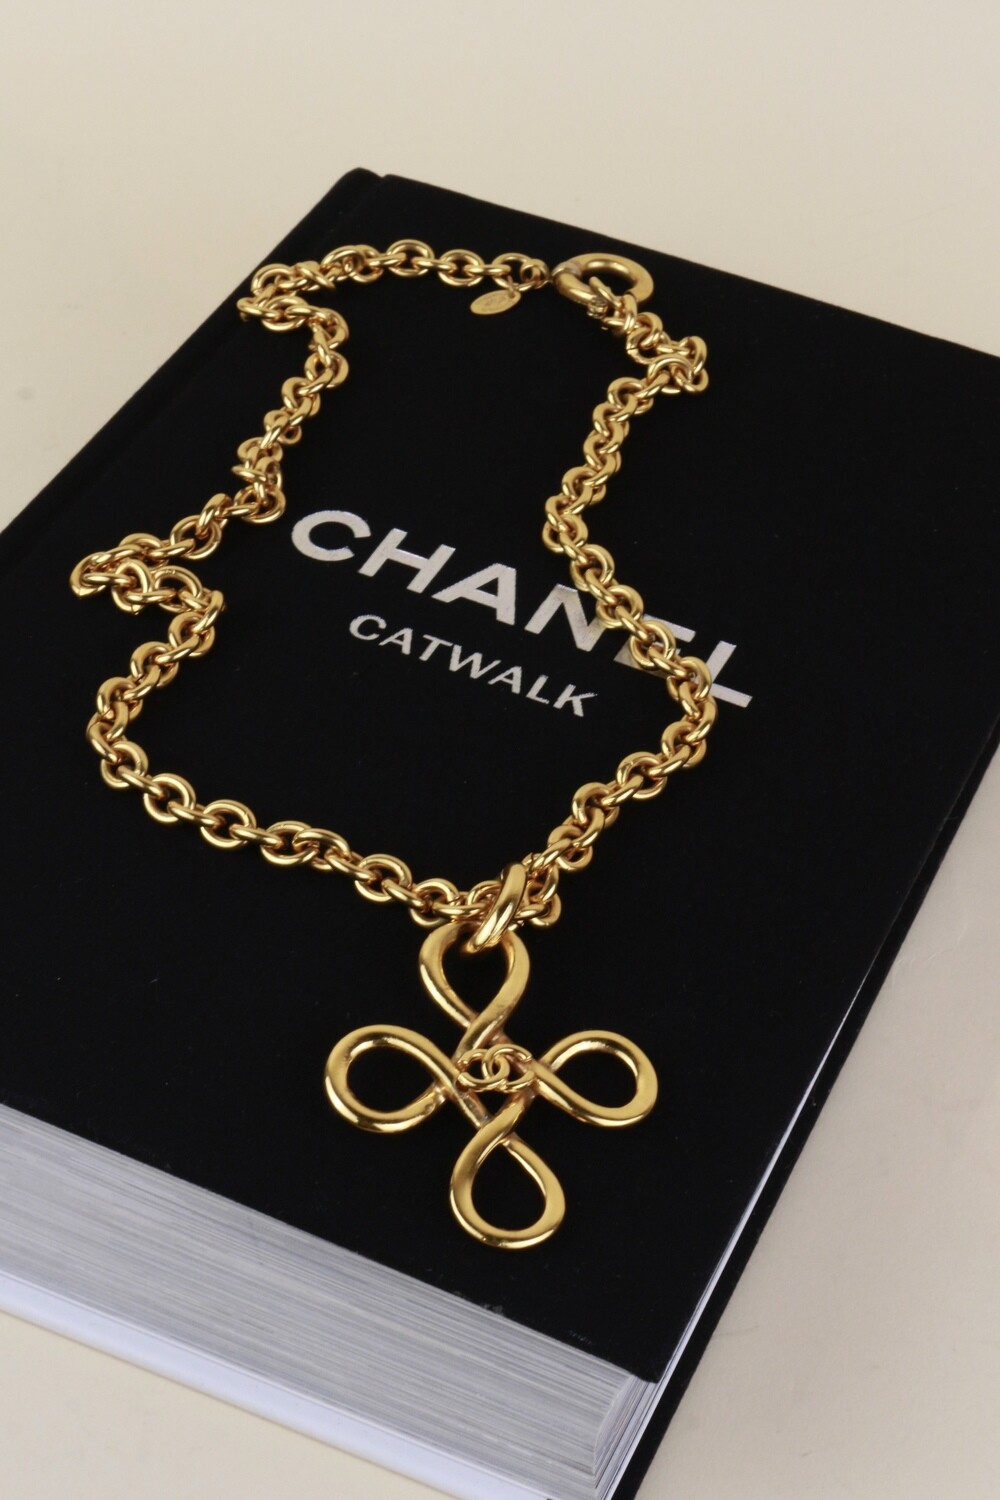 Chanel necklace vintage gold